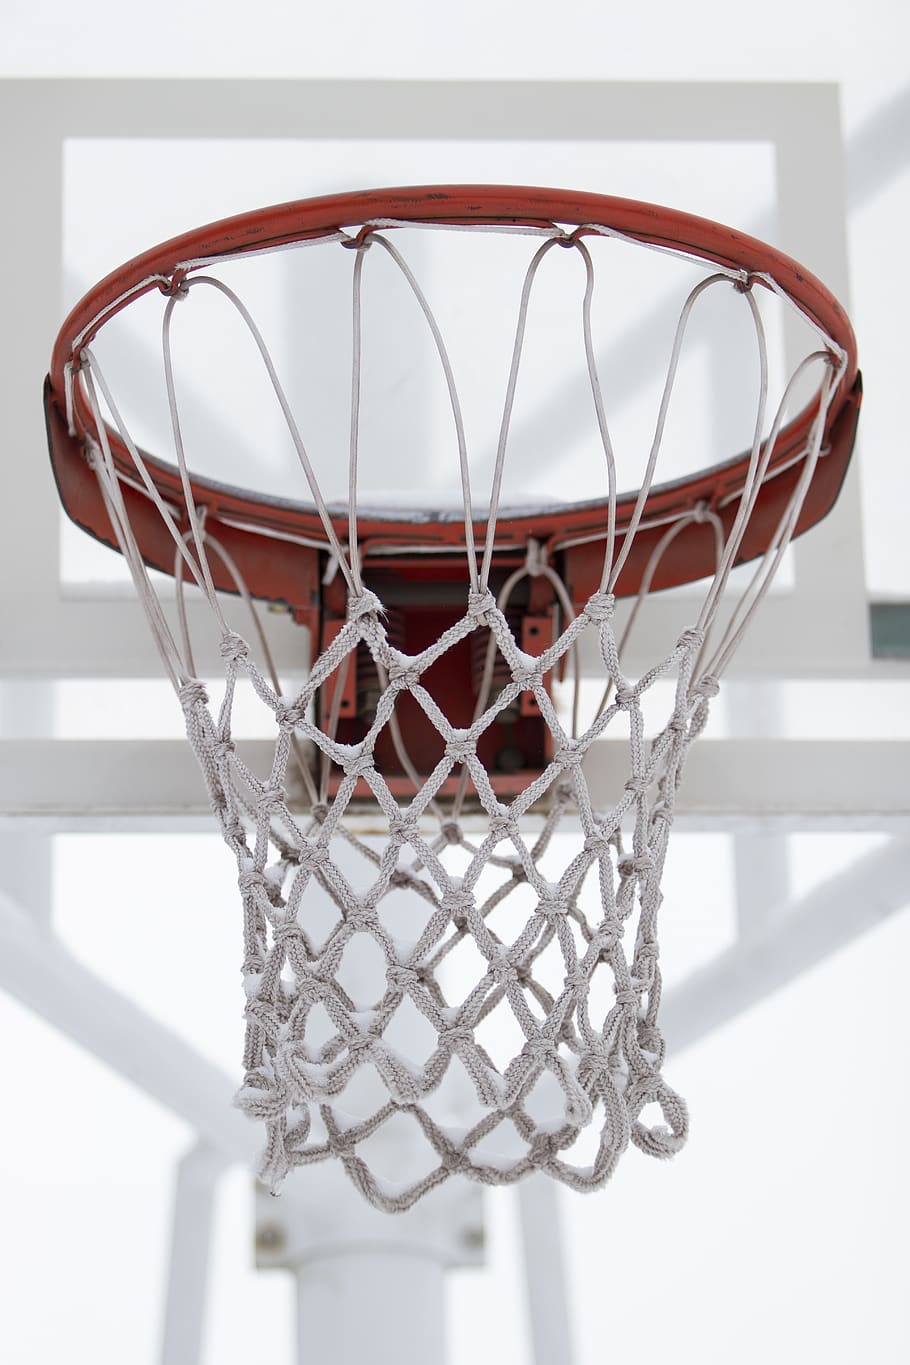 basketball, sport, goji, basketball hoops, net, basketball courts